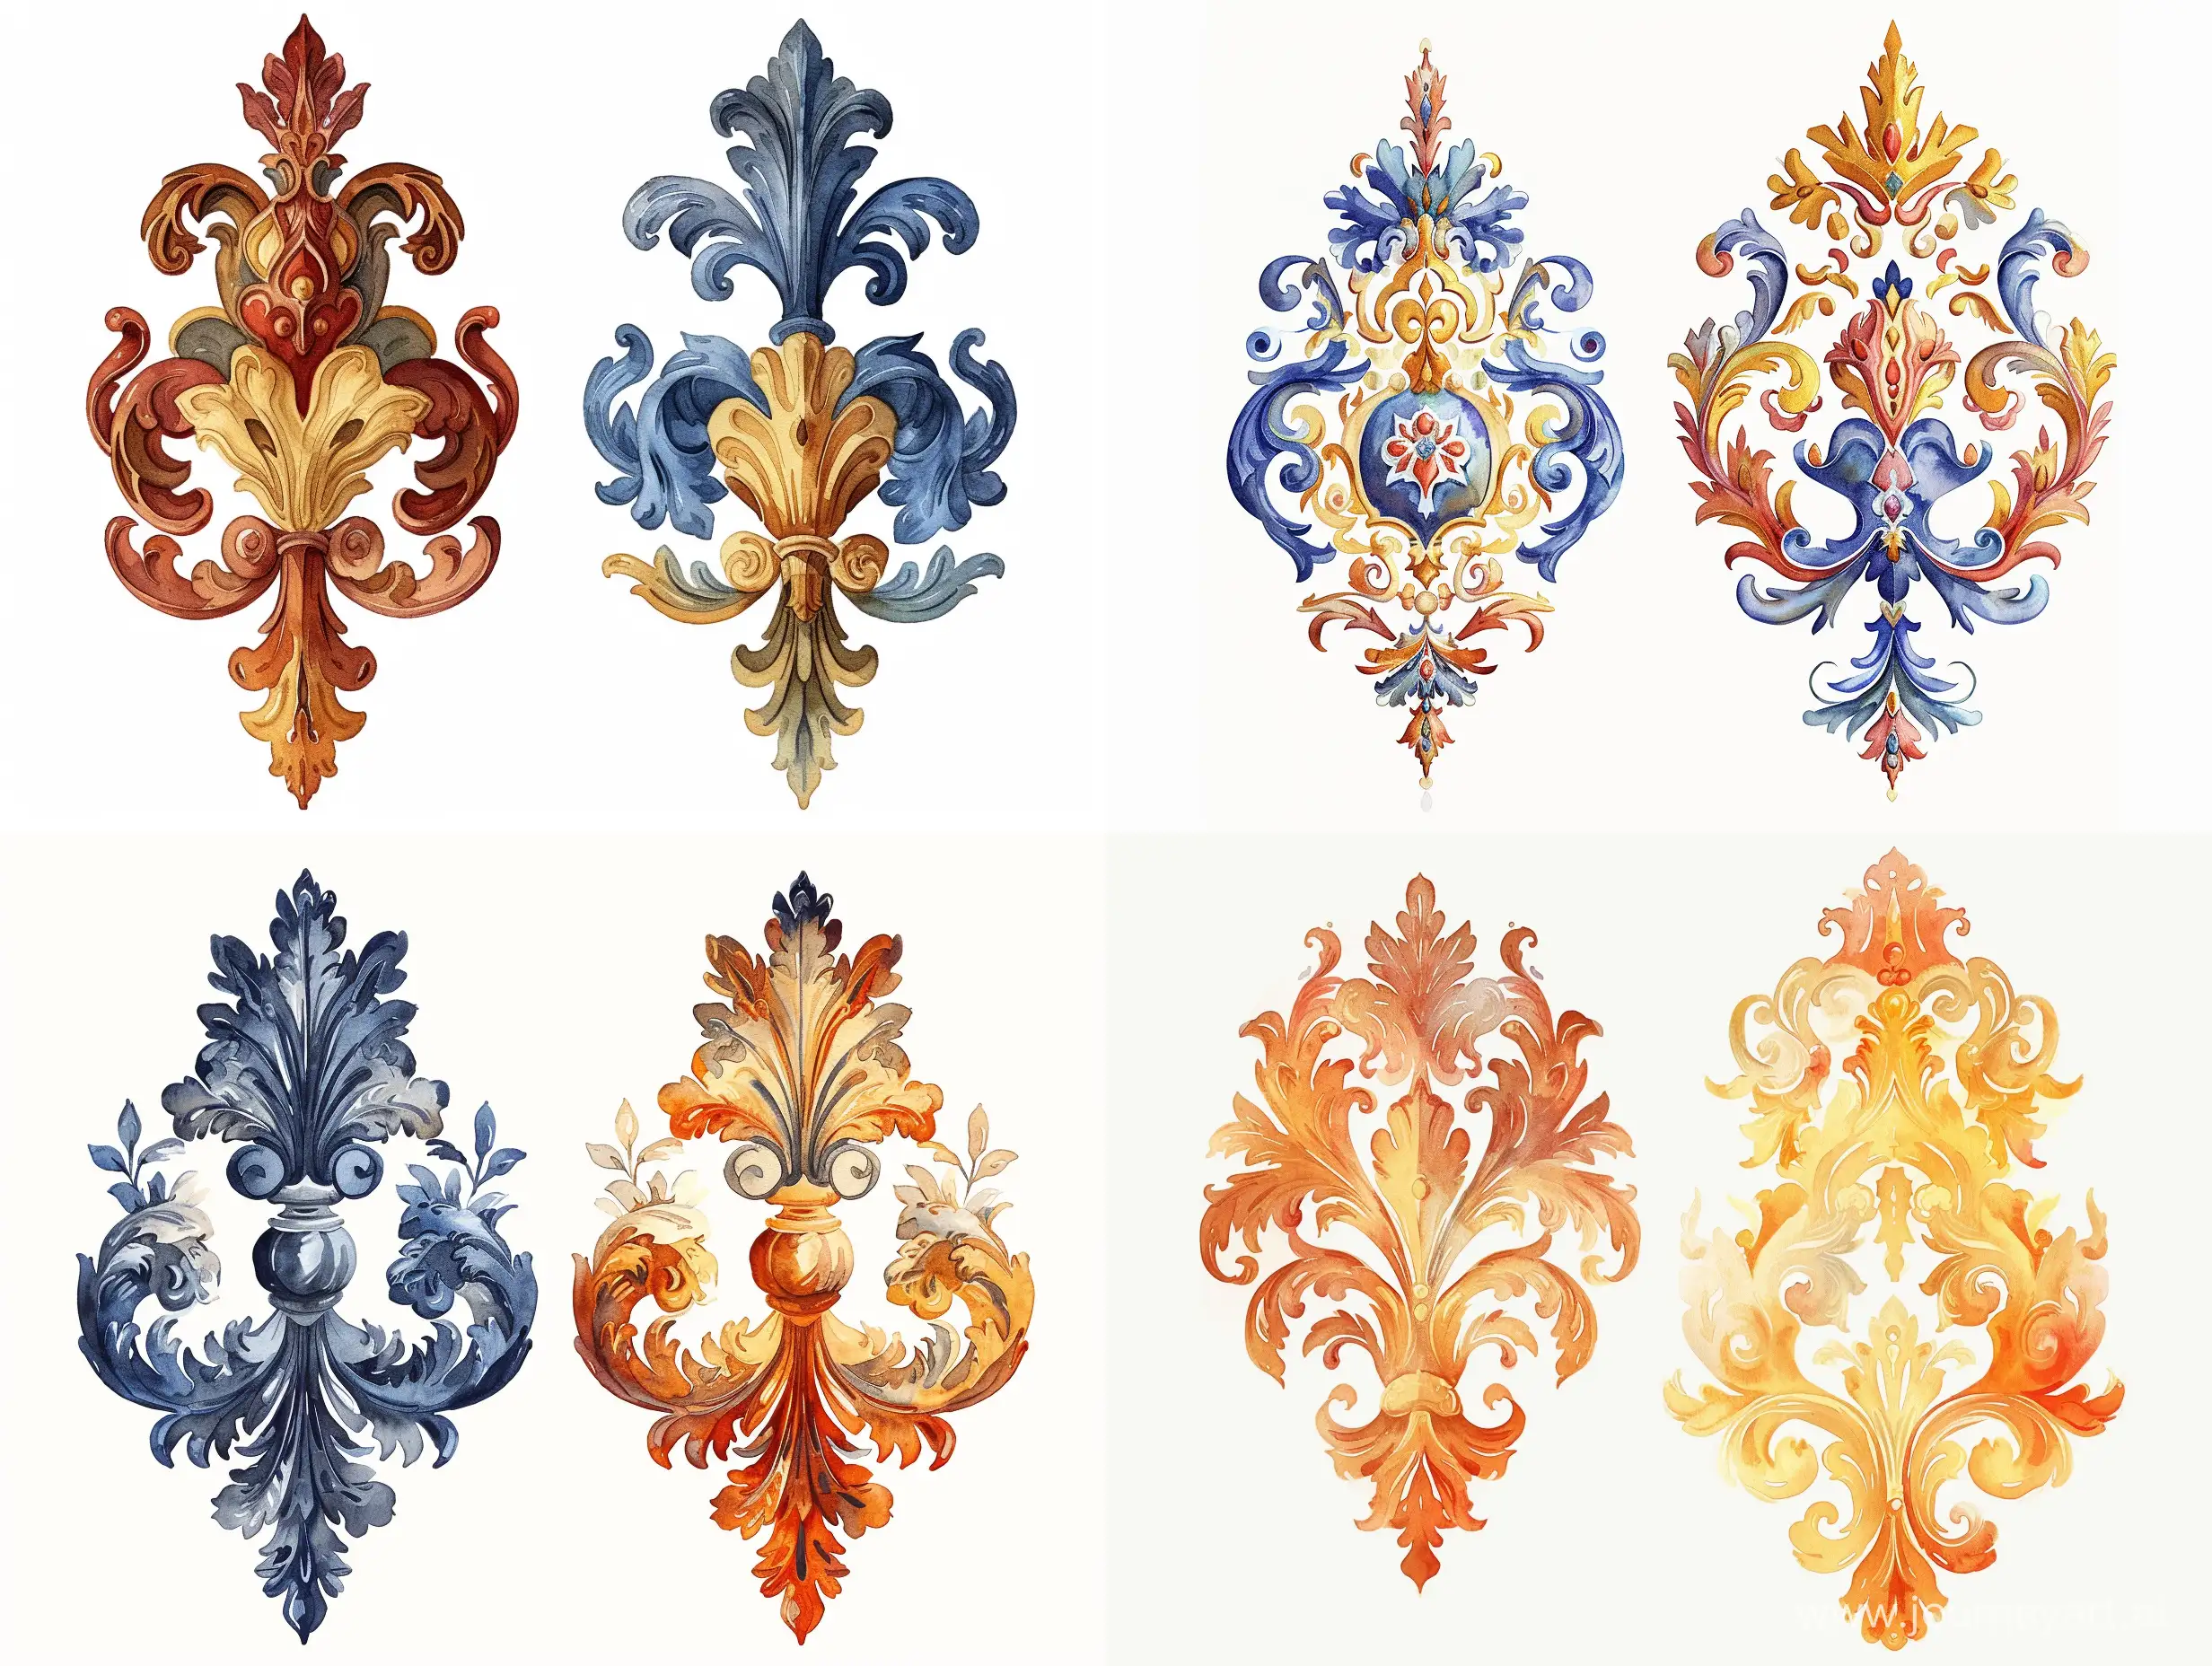 Renaissance-King-Ornaments-Decorative-Watercolor-Variants